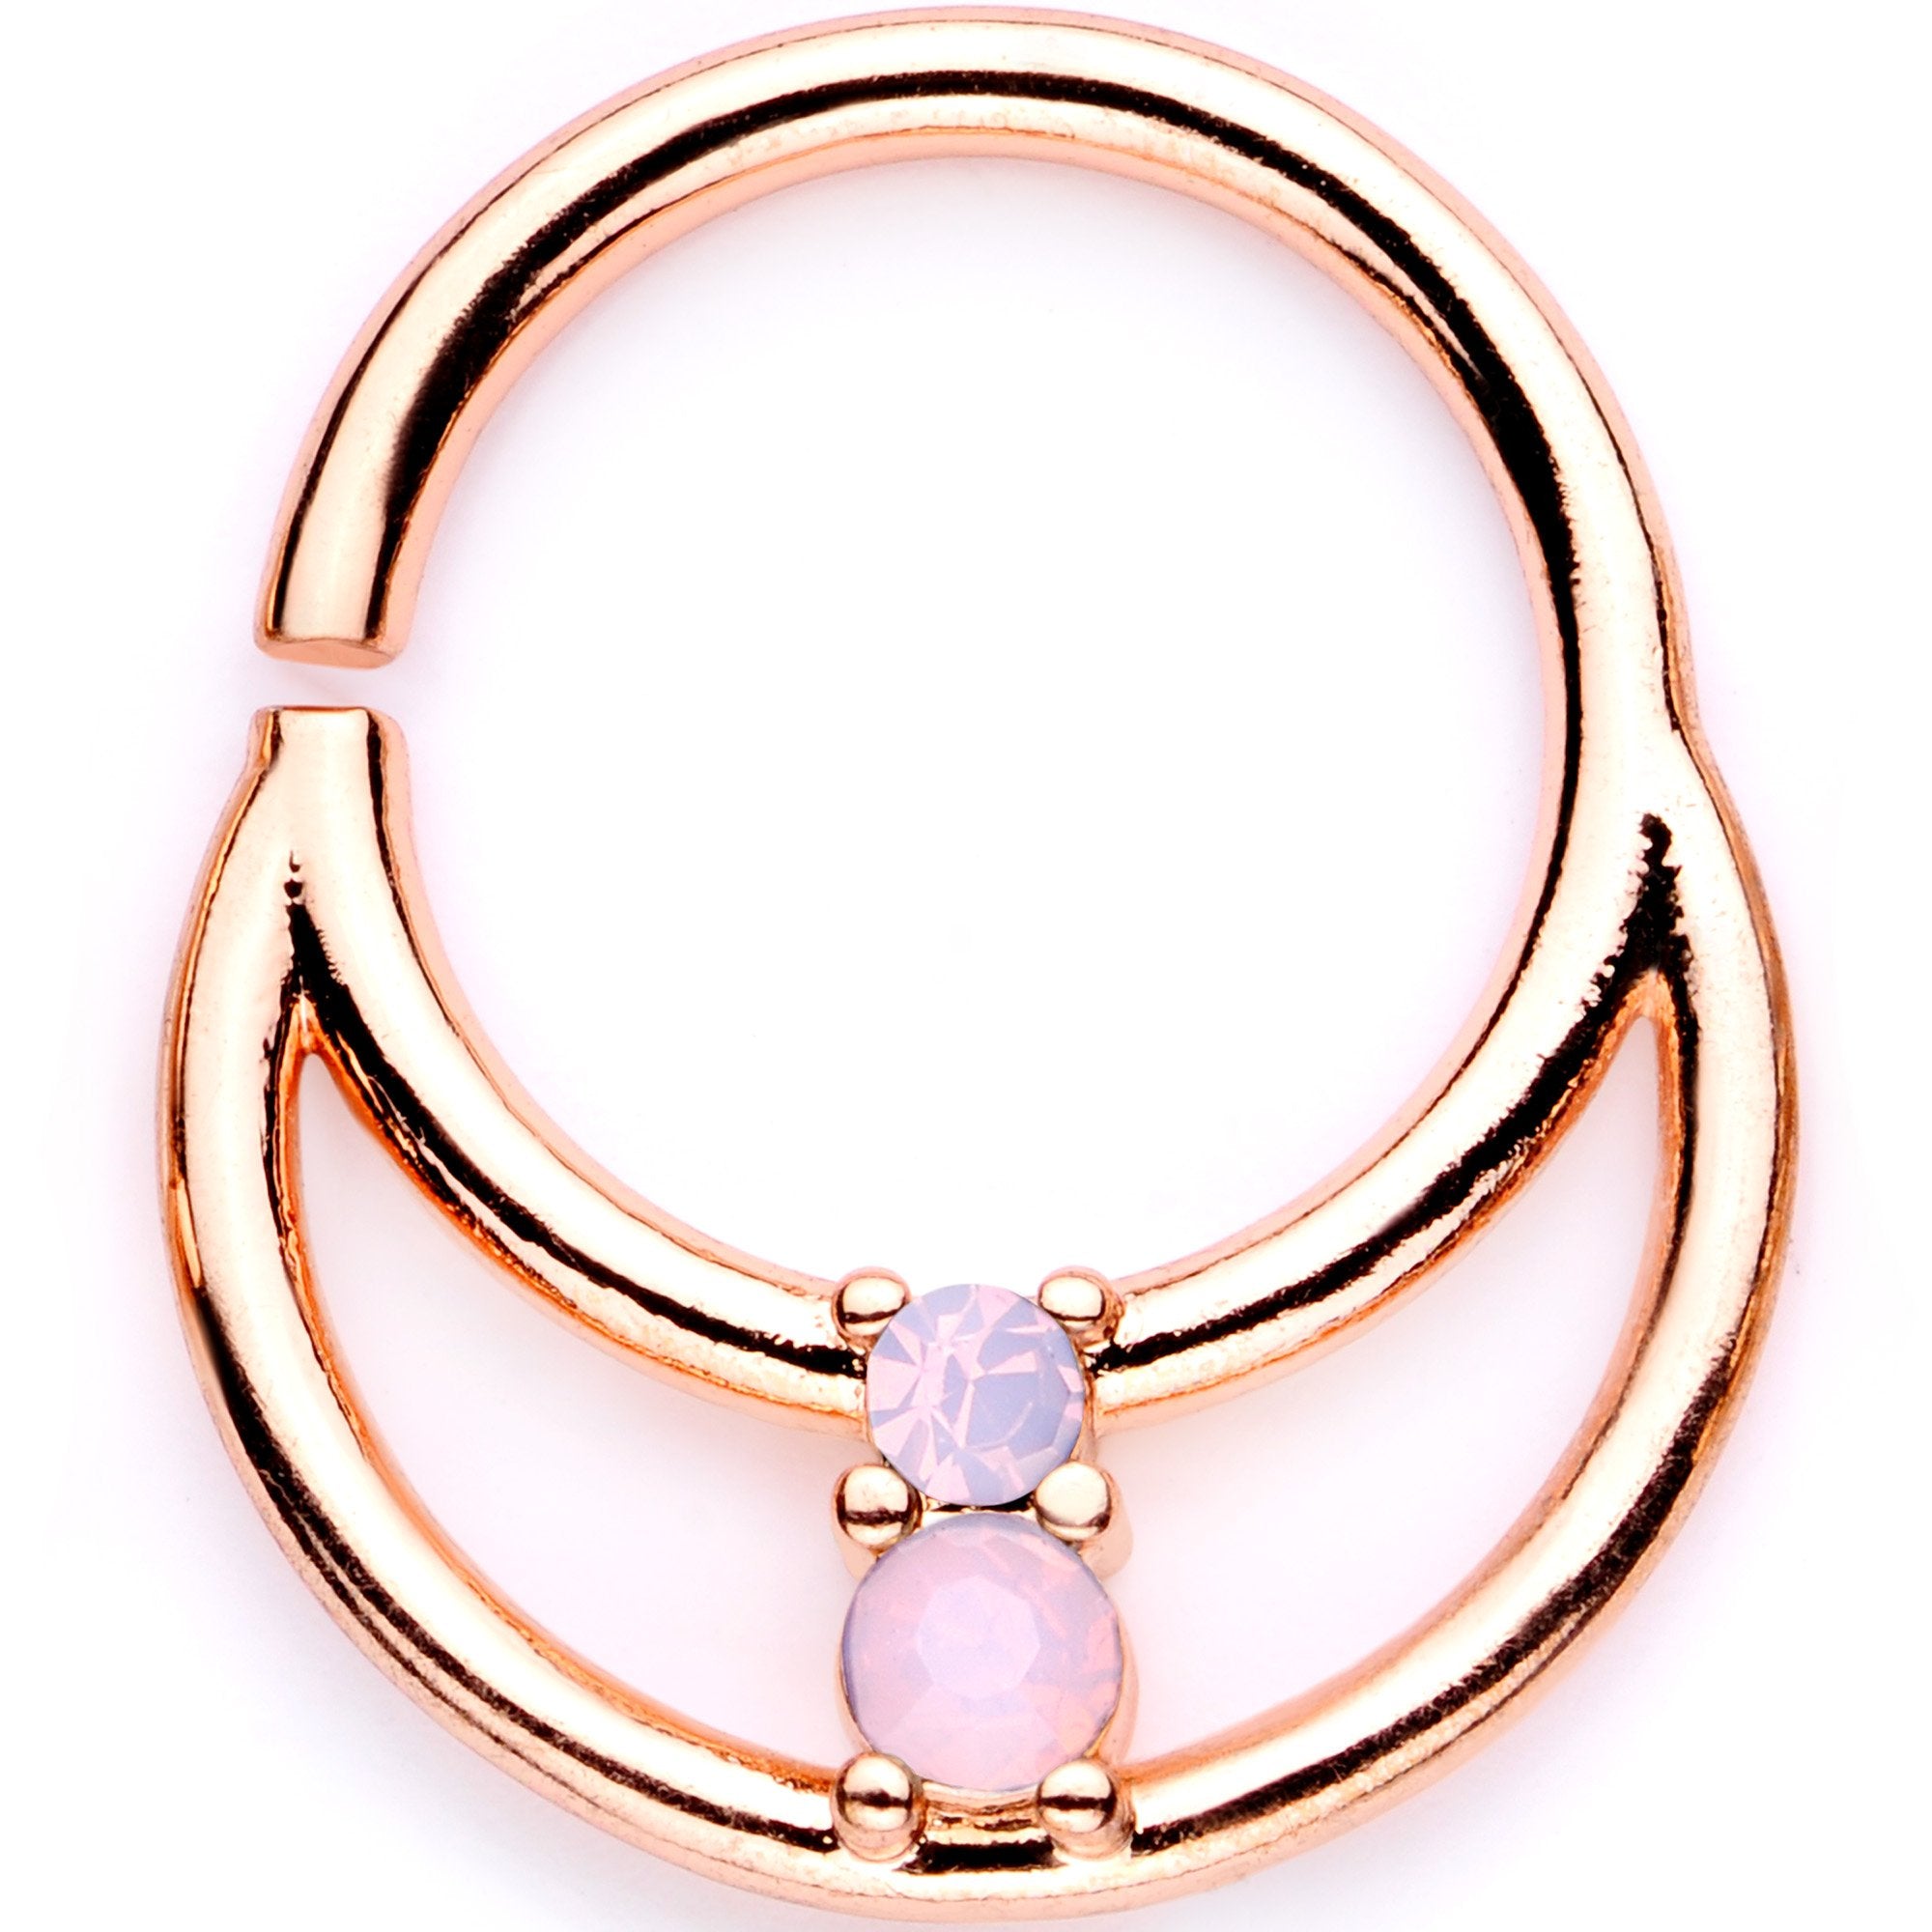 16 Gauge 3/8 Pink Faux Opal Rose Gold Tone Horseshoe Closure Ring Set